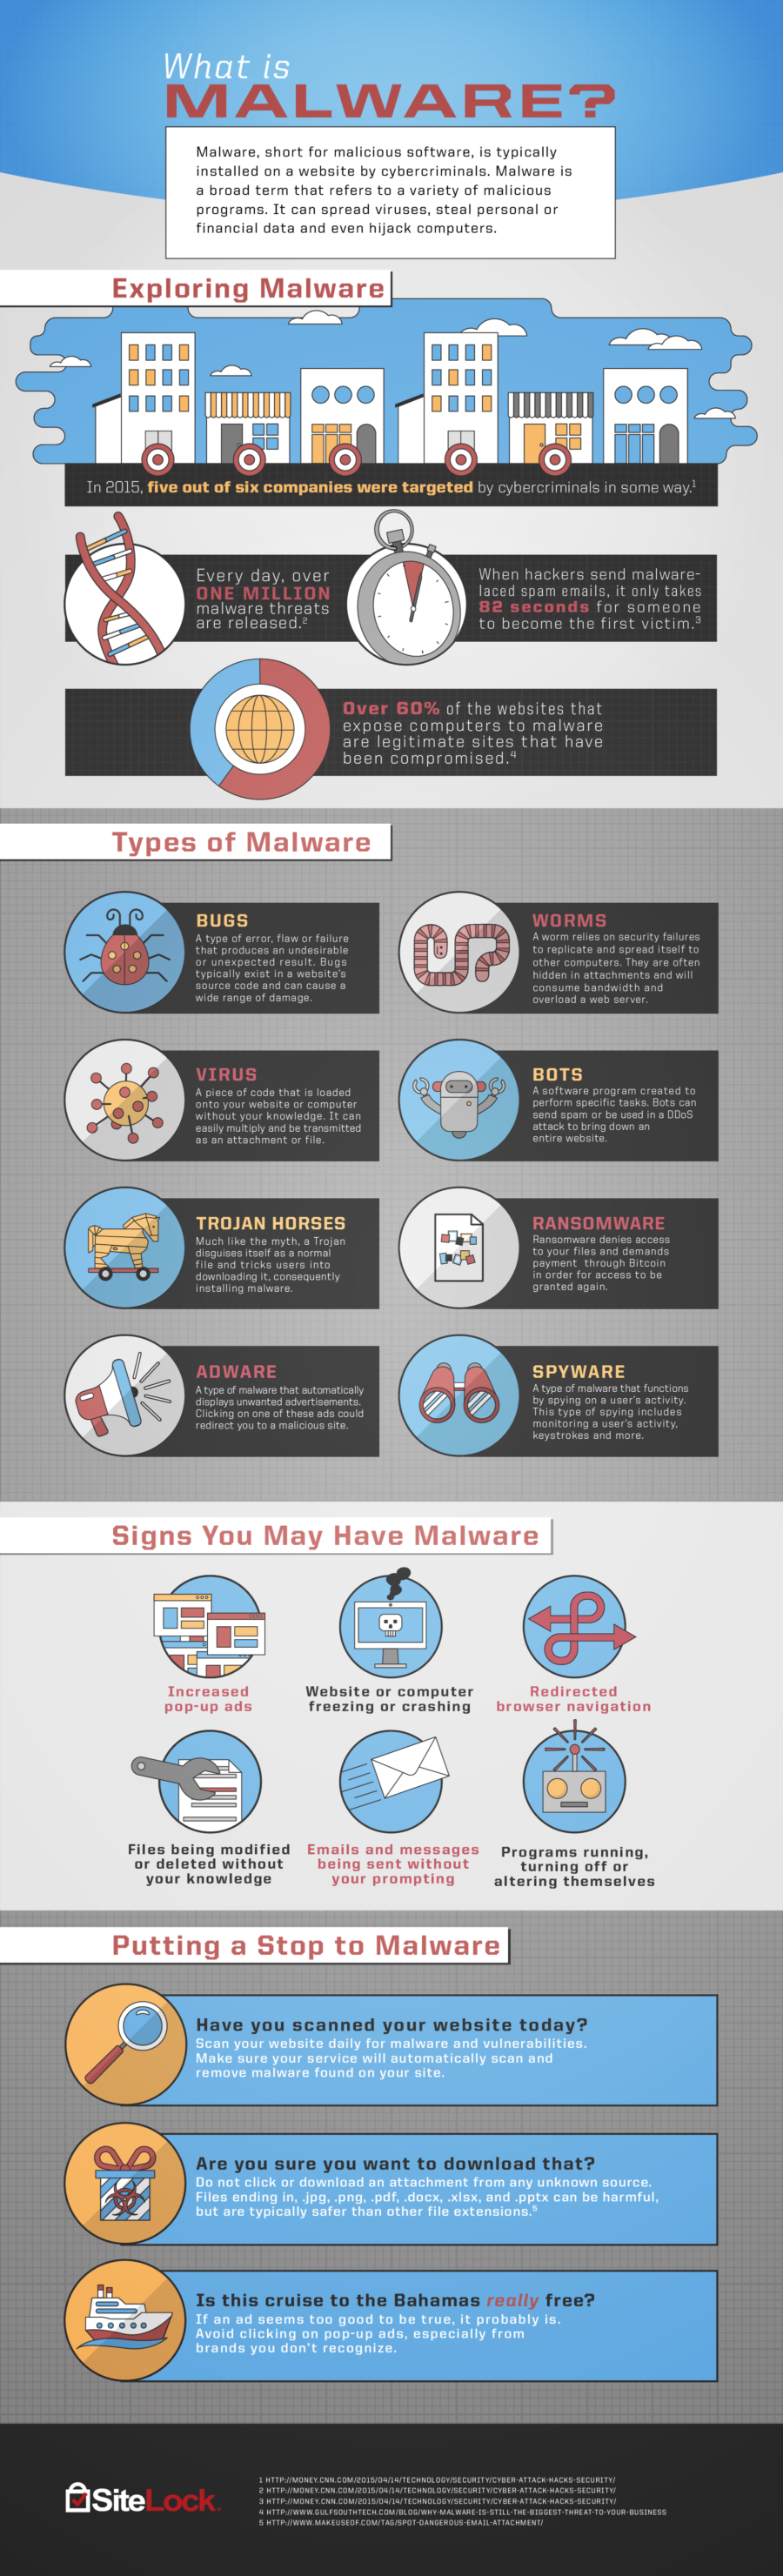 malware types